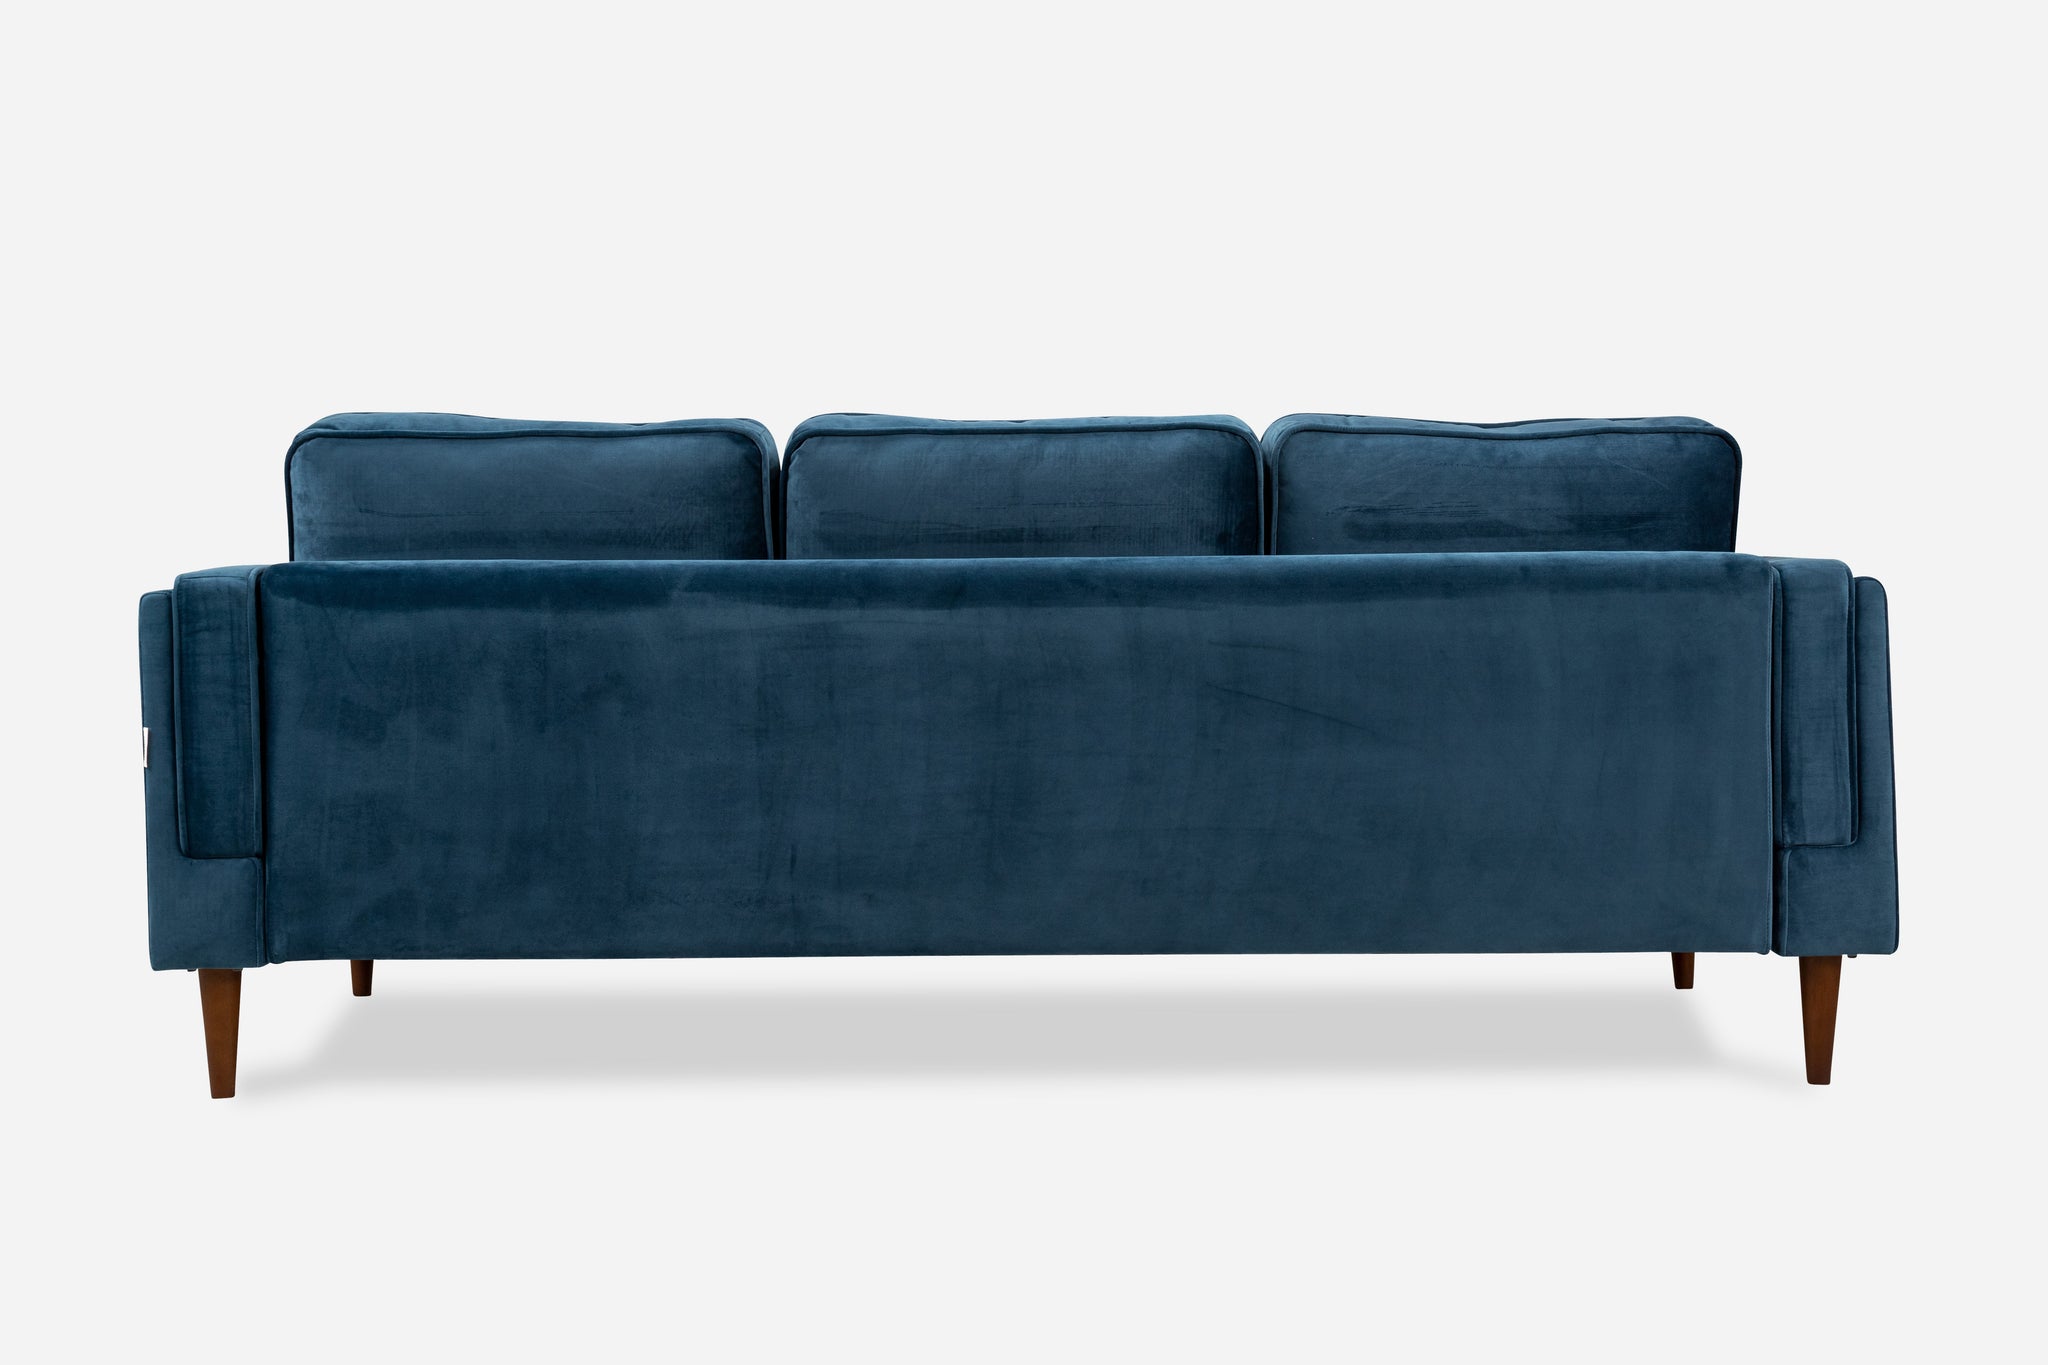 albany sofa shown in blue velvet with walnut legs